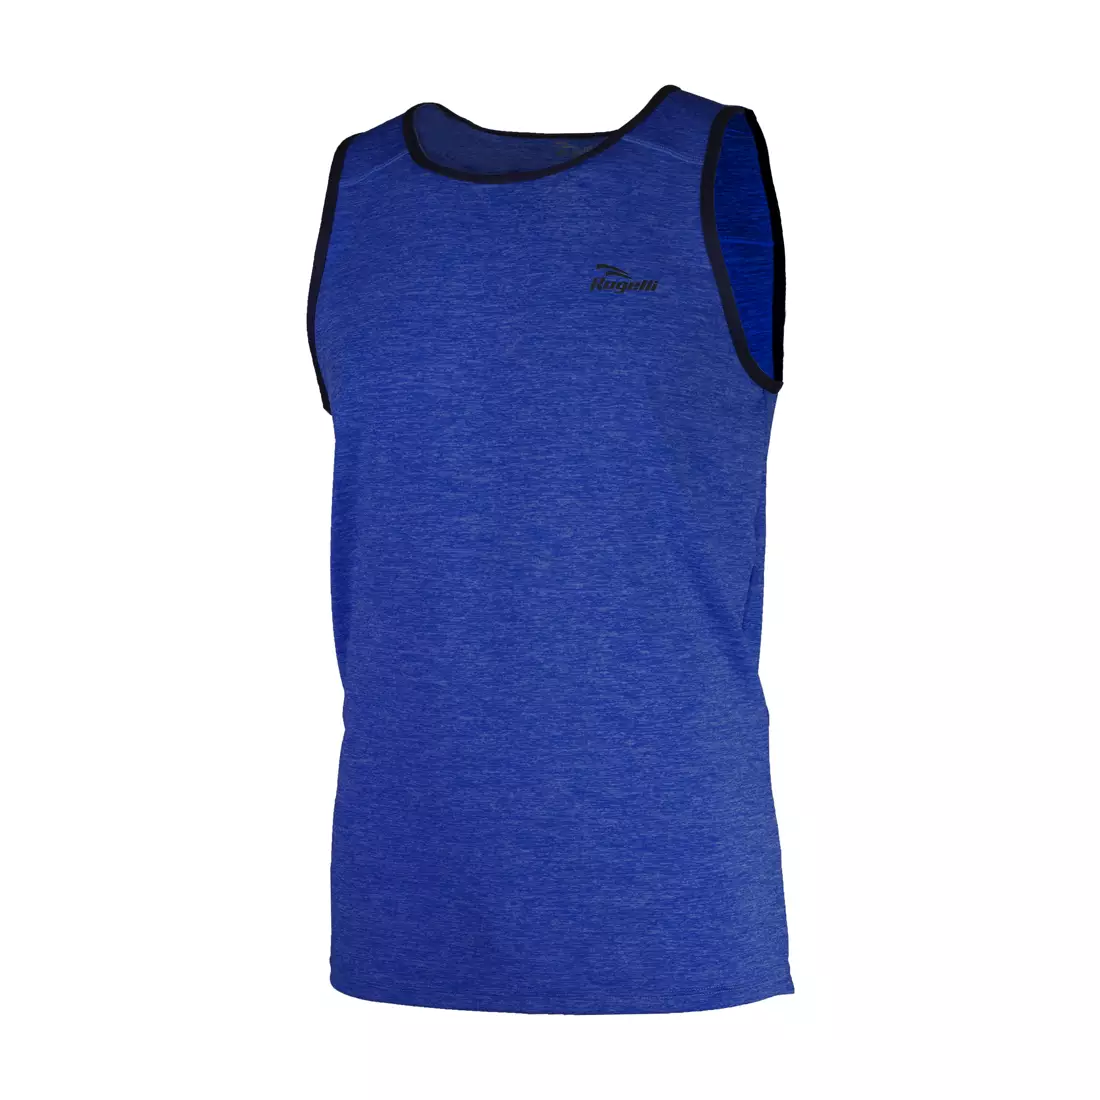 ROGELLI RUN BARRETT 830.238 - pánské tričko bez rukávů/běžecký top, barva: modrá